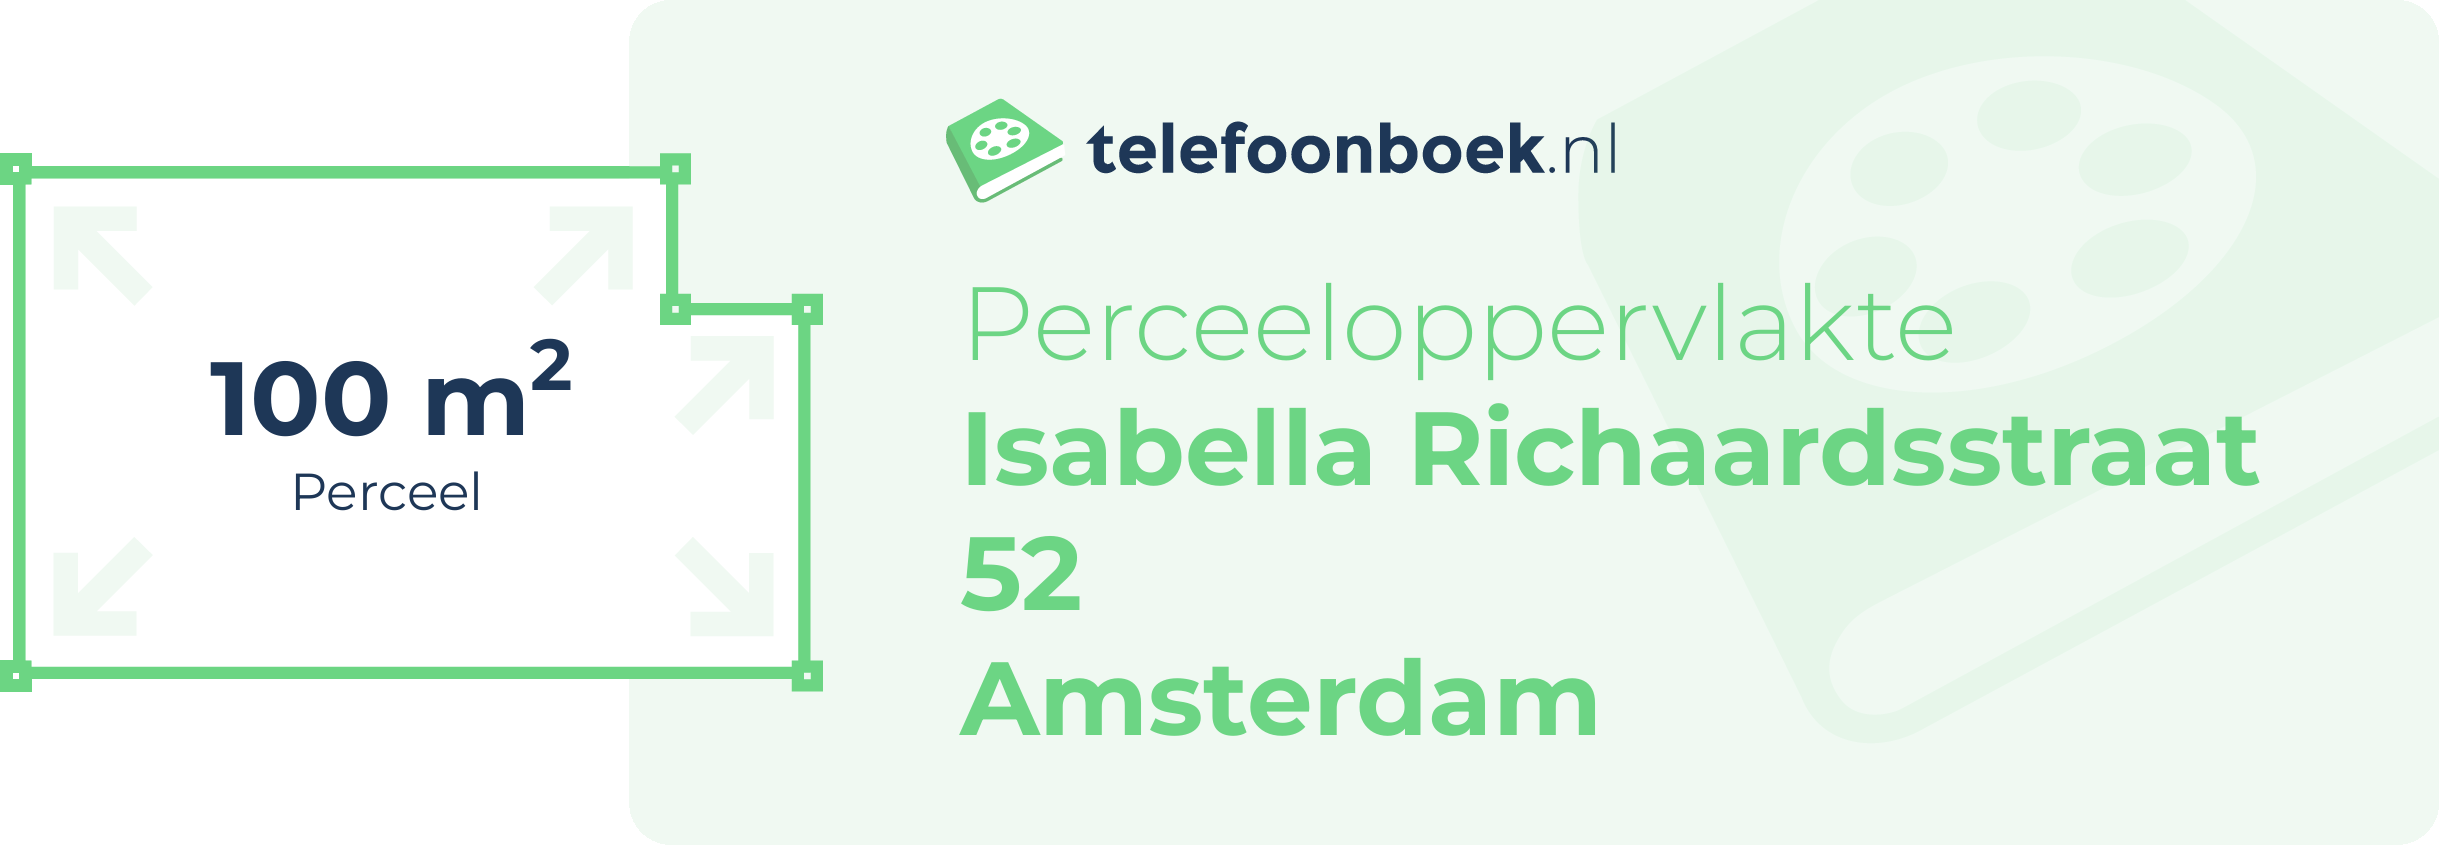 Perceeloppervlakte Isabella Richaardsstraat 52 Amsterdam